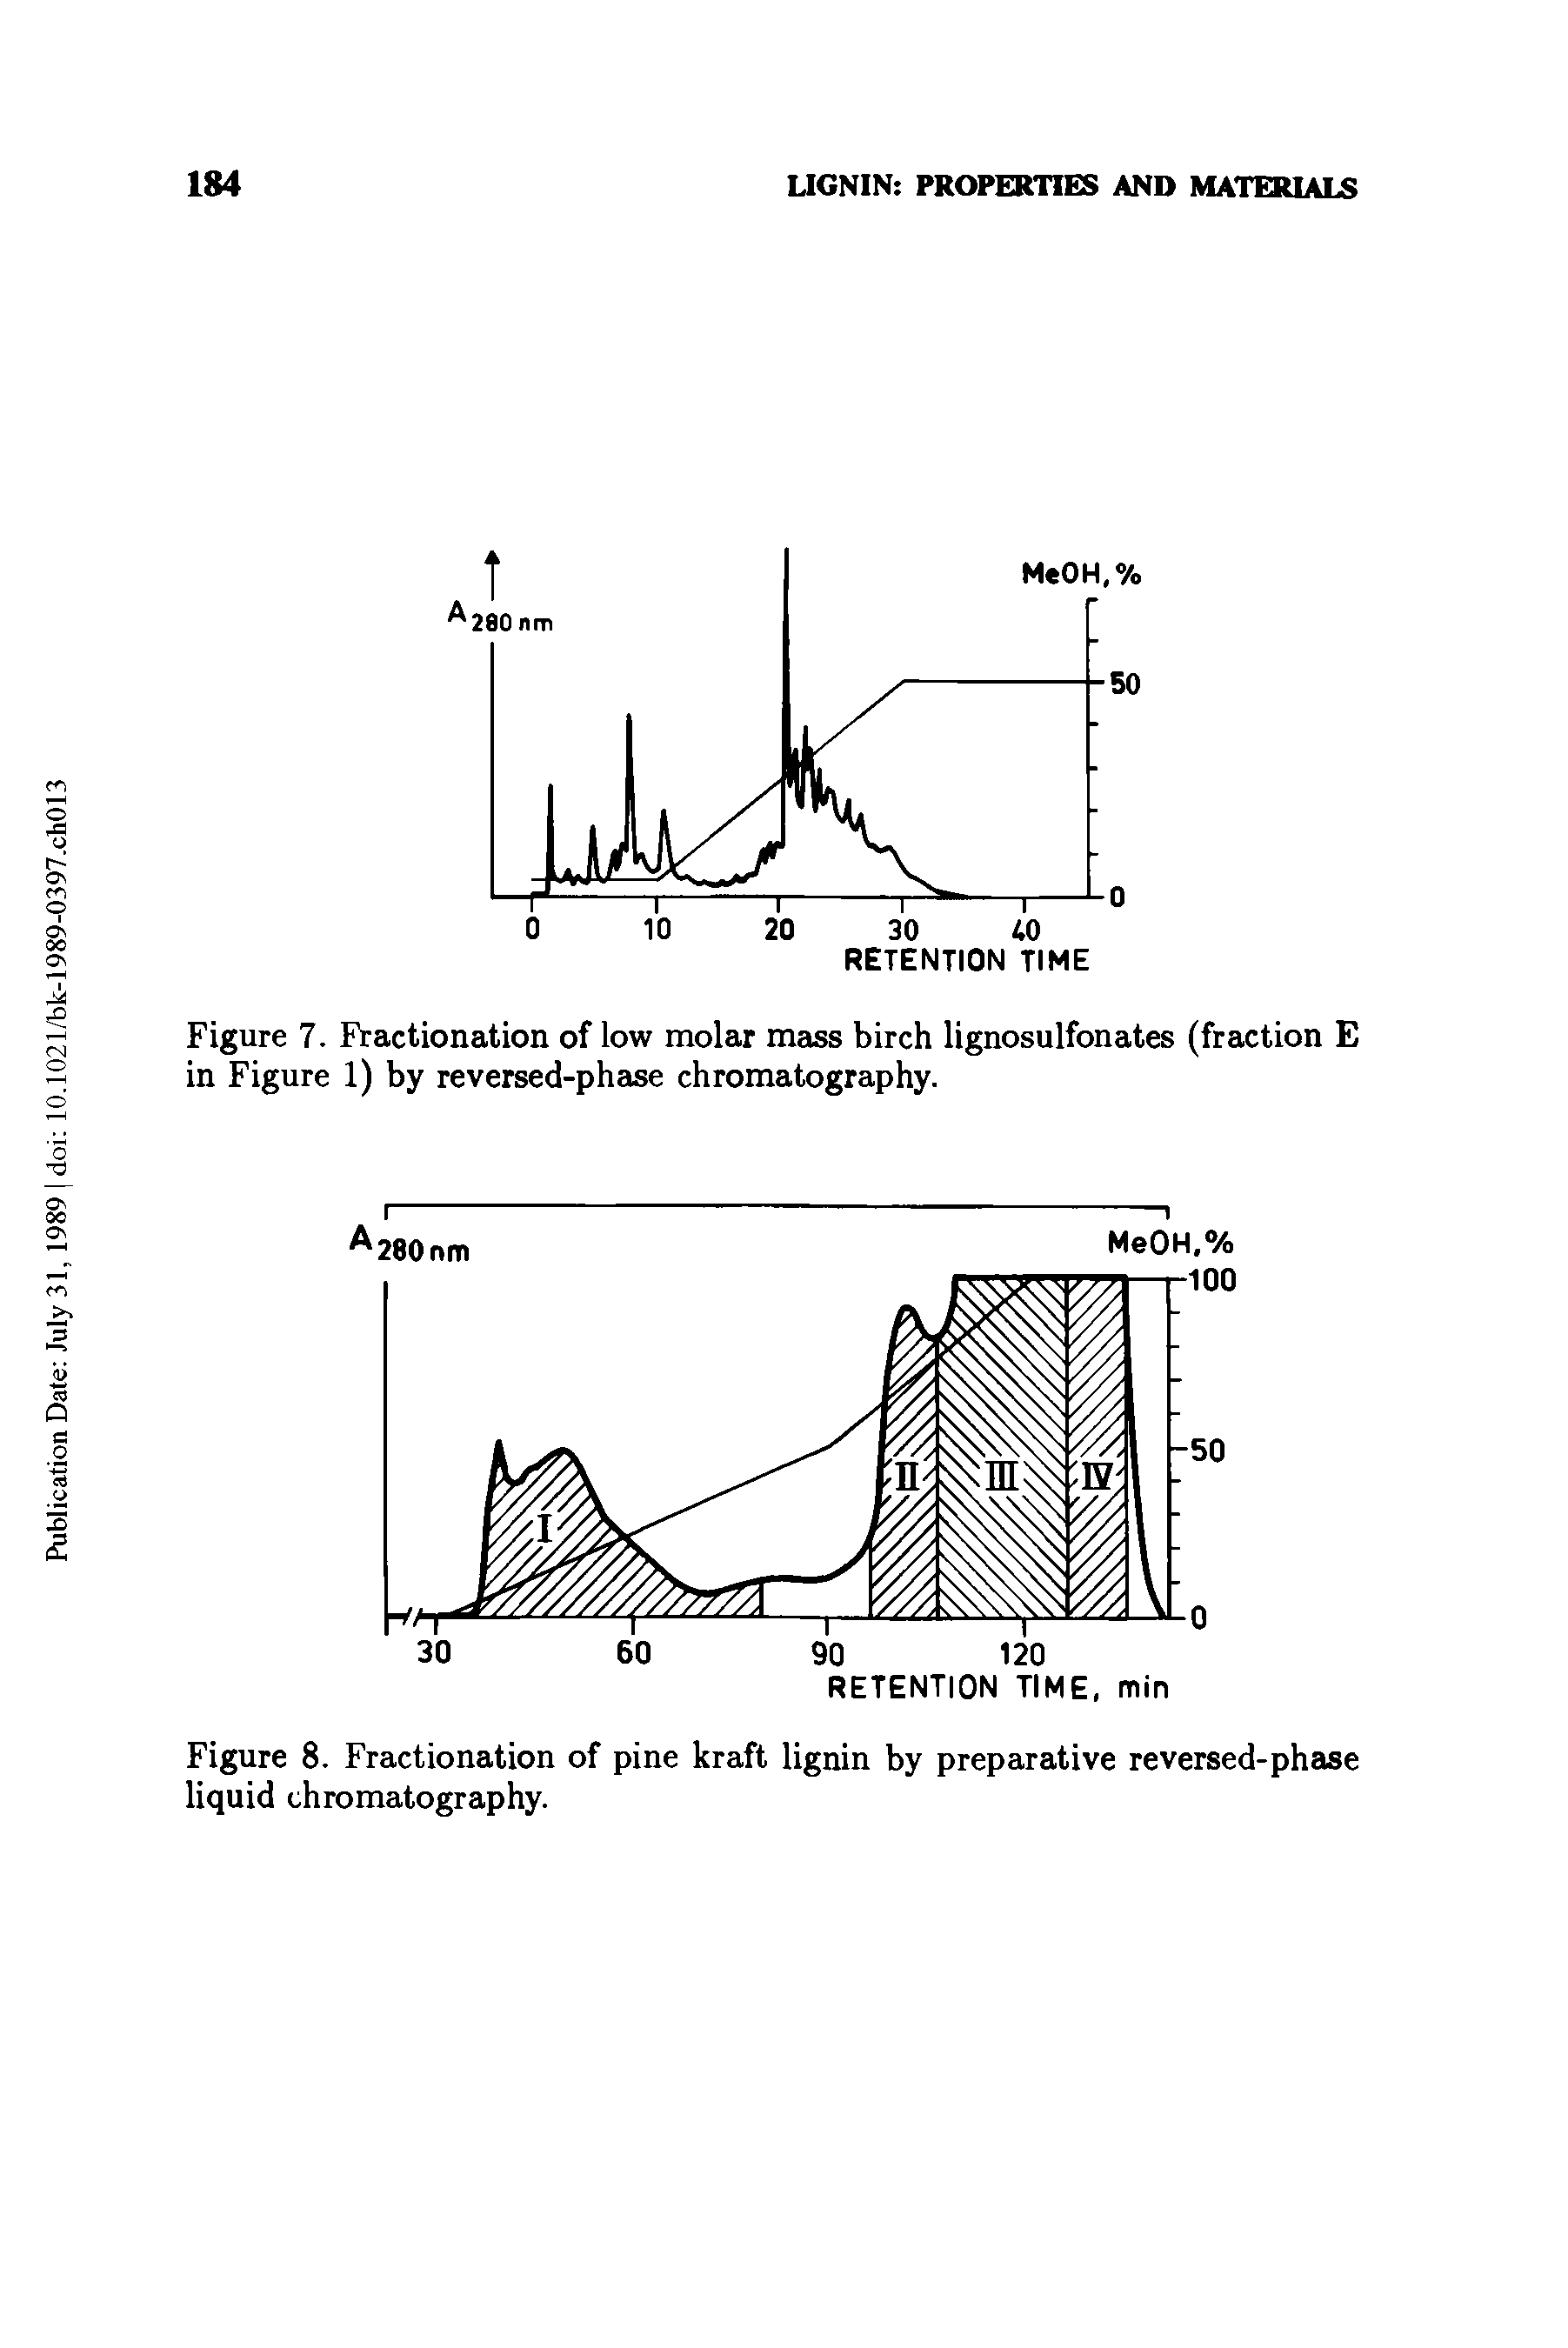 Figure 8. Fractionation of pine kraft lignin by preparative reversed-phase liquid chromatography.